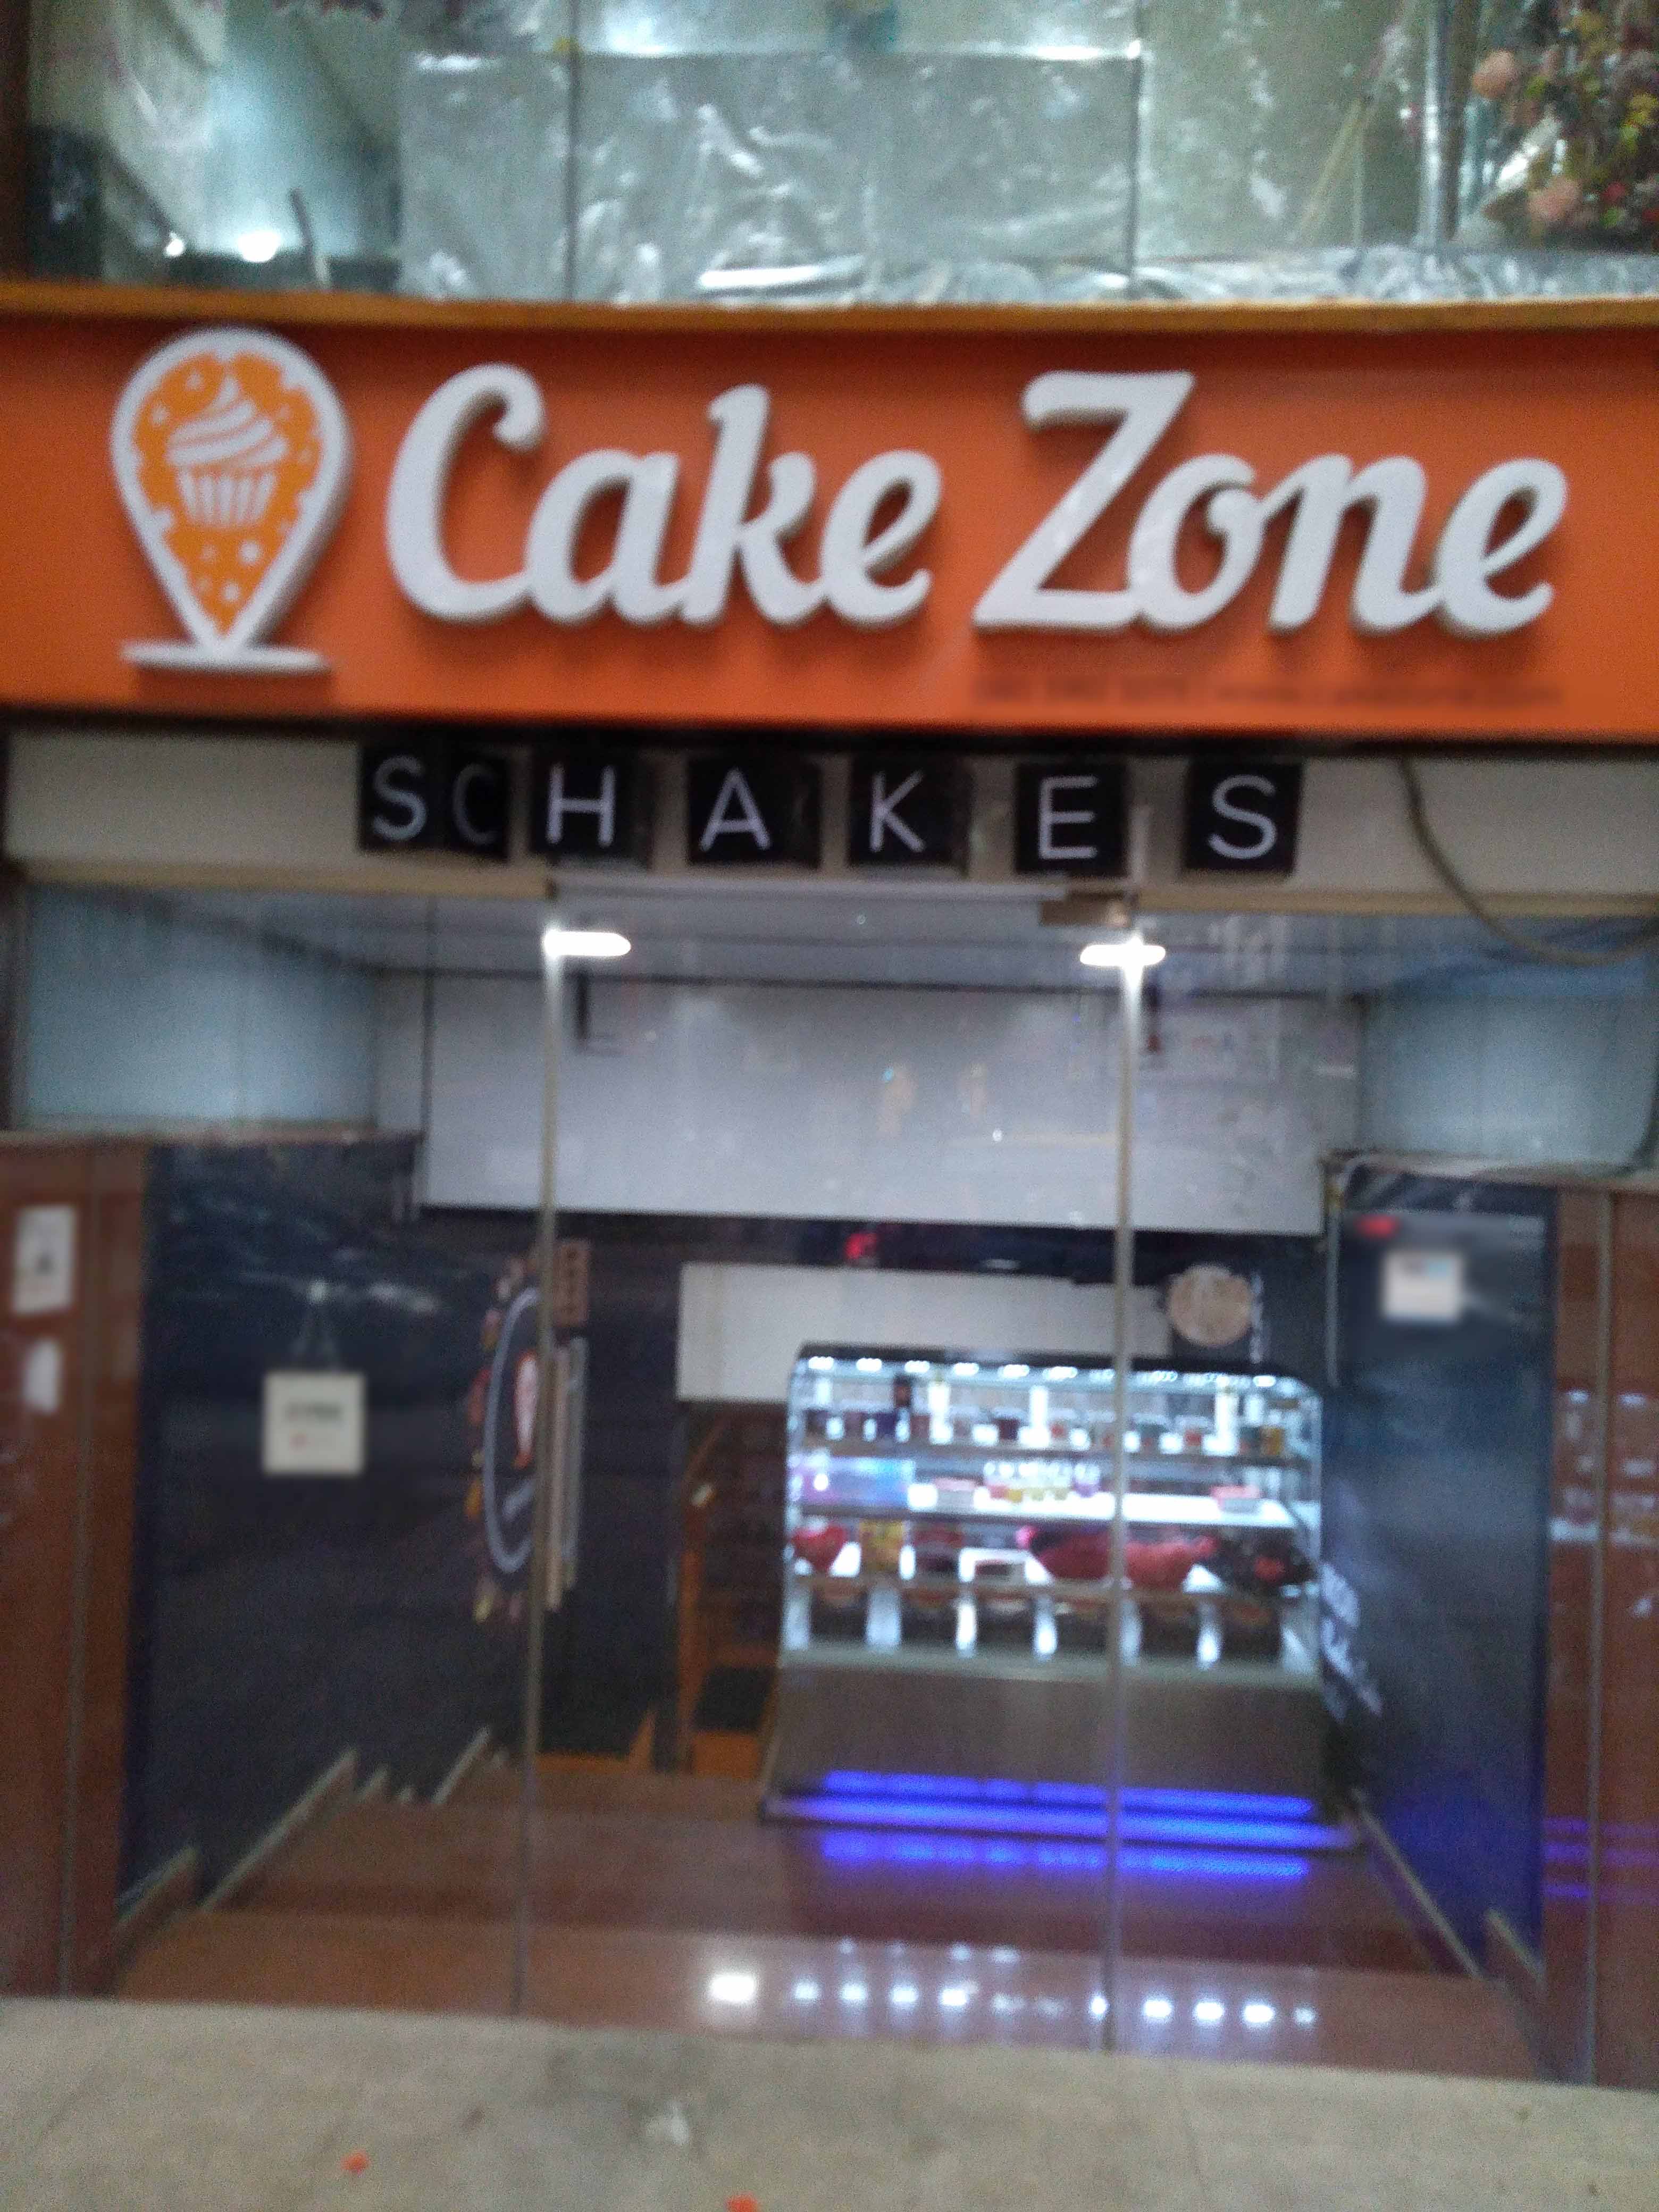 Cake Zone – Eggless Cakes